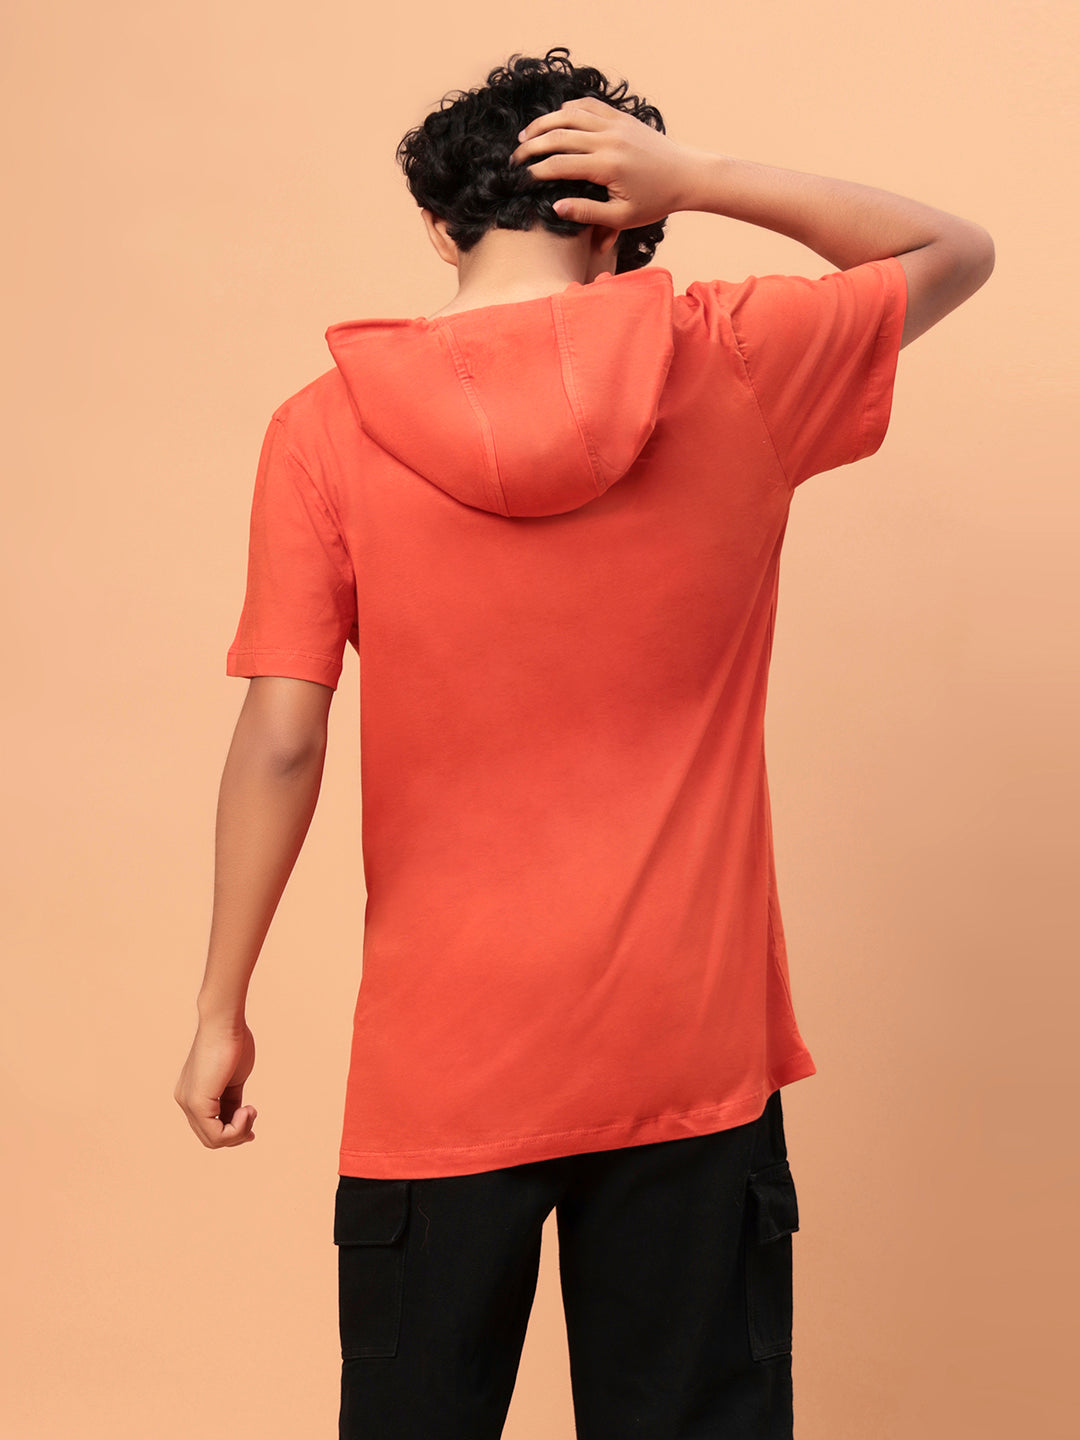 Boys Oversized Hoodie T-shirt-Rust Orange